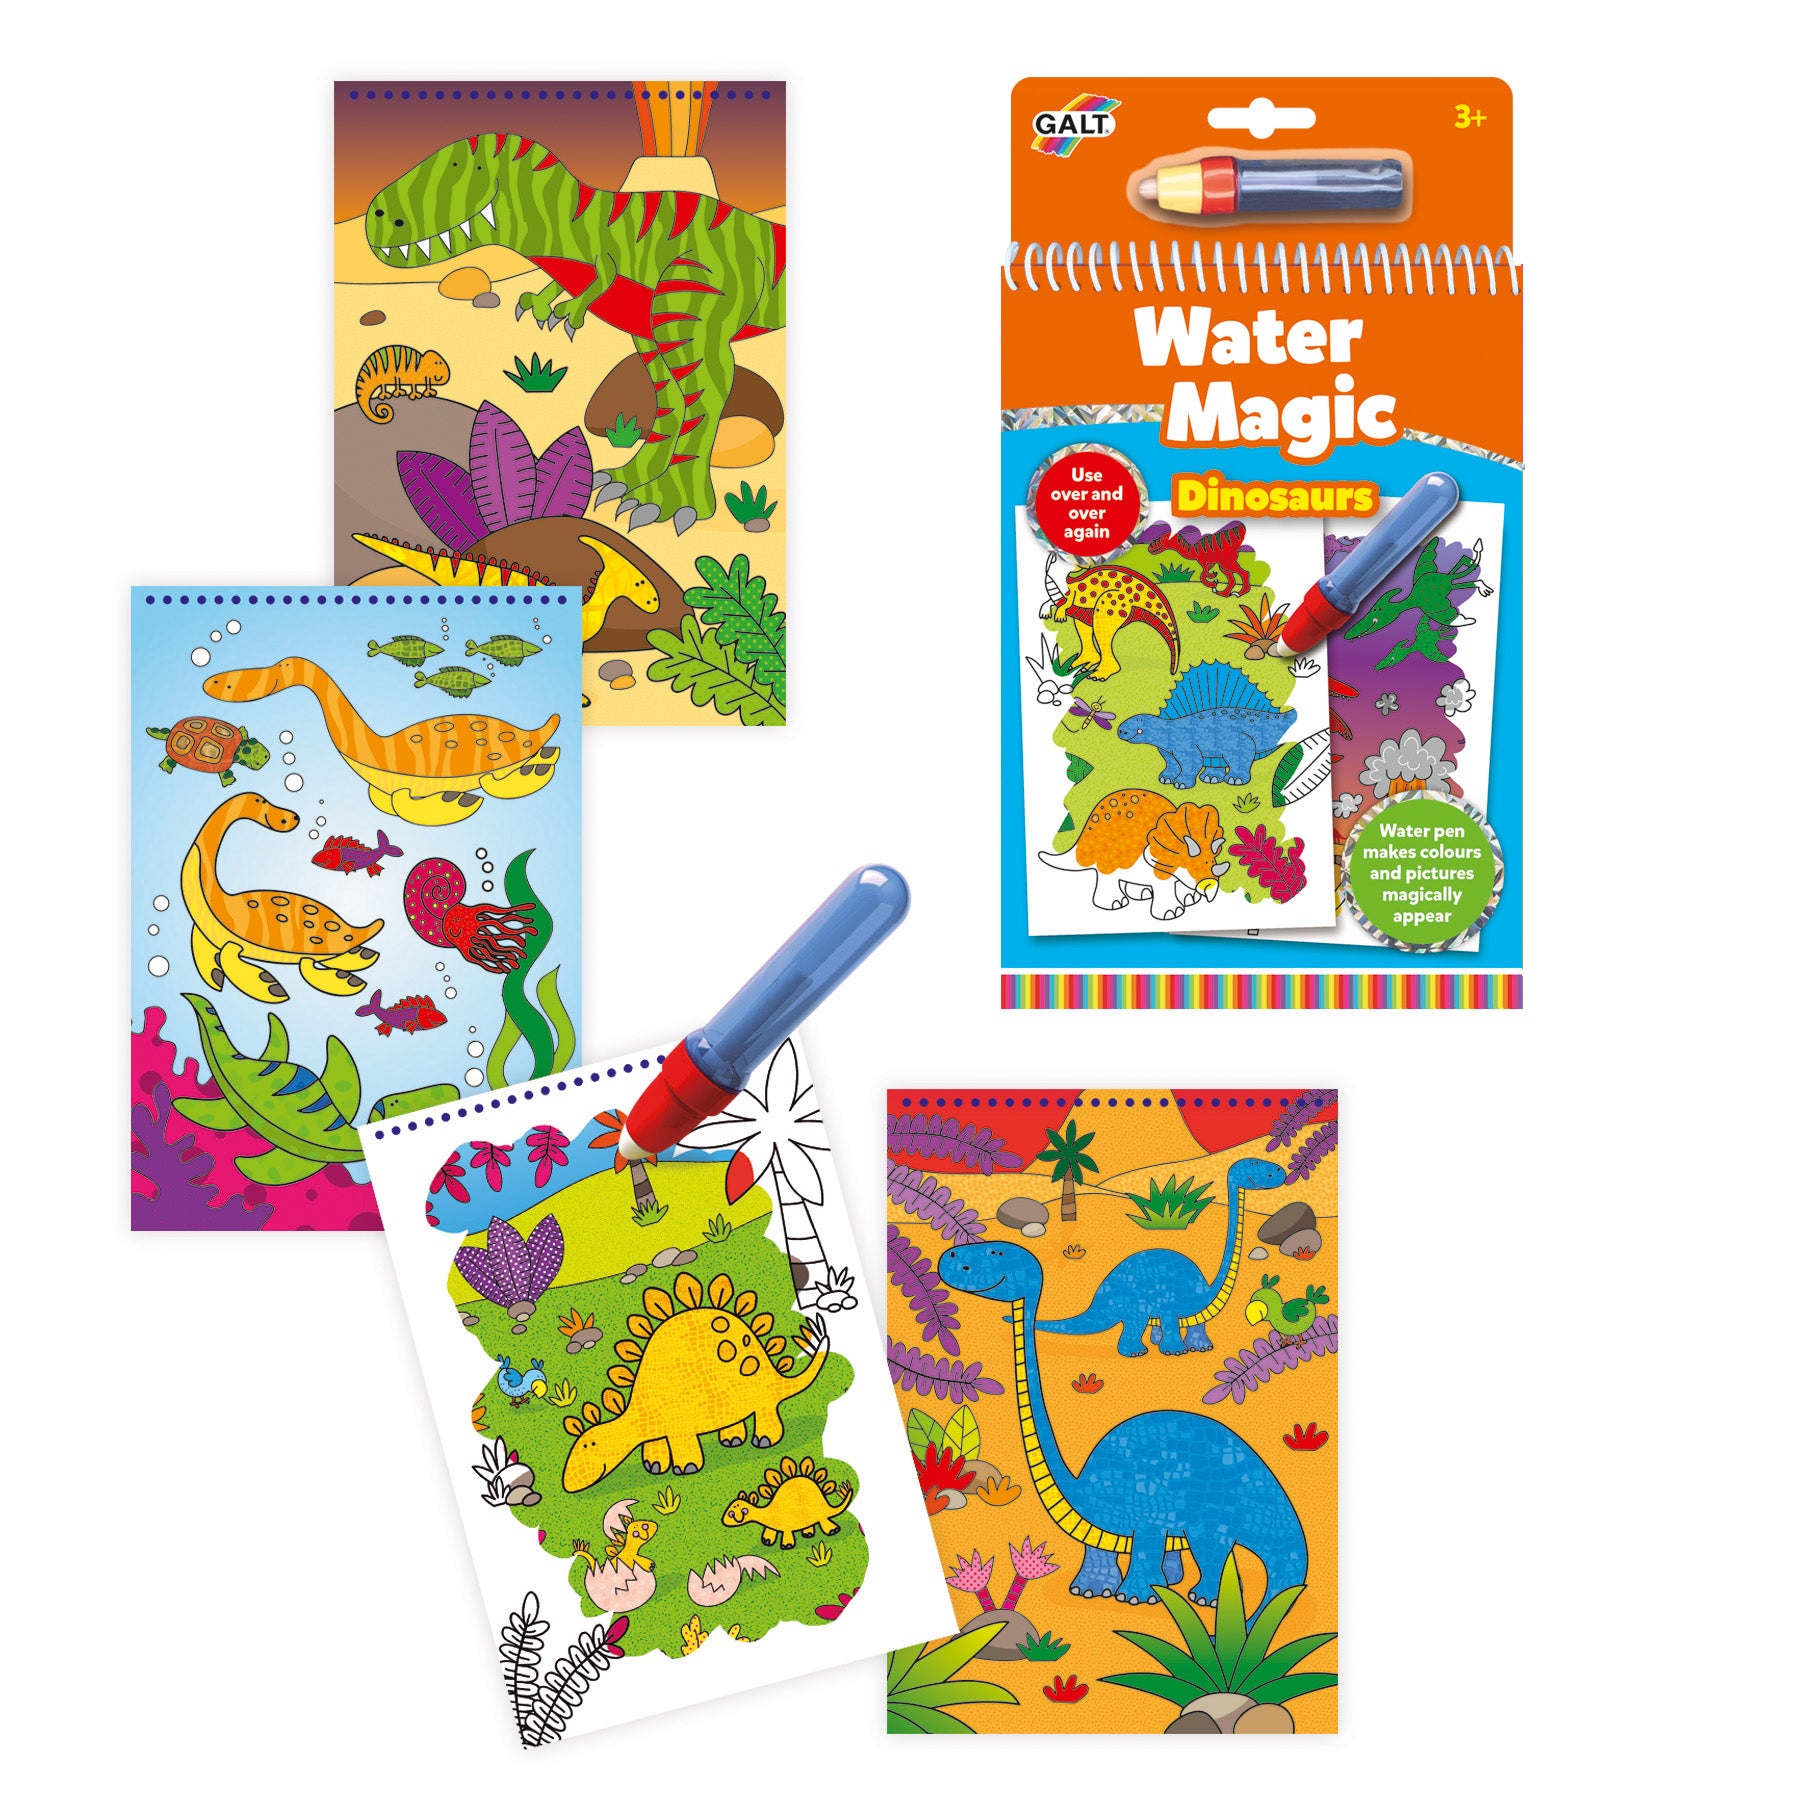 Water Magic Dinosaurs - product image - Jumboplay.com